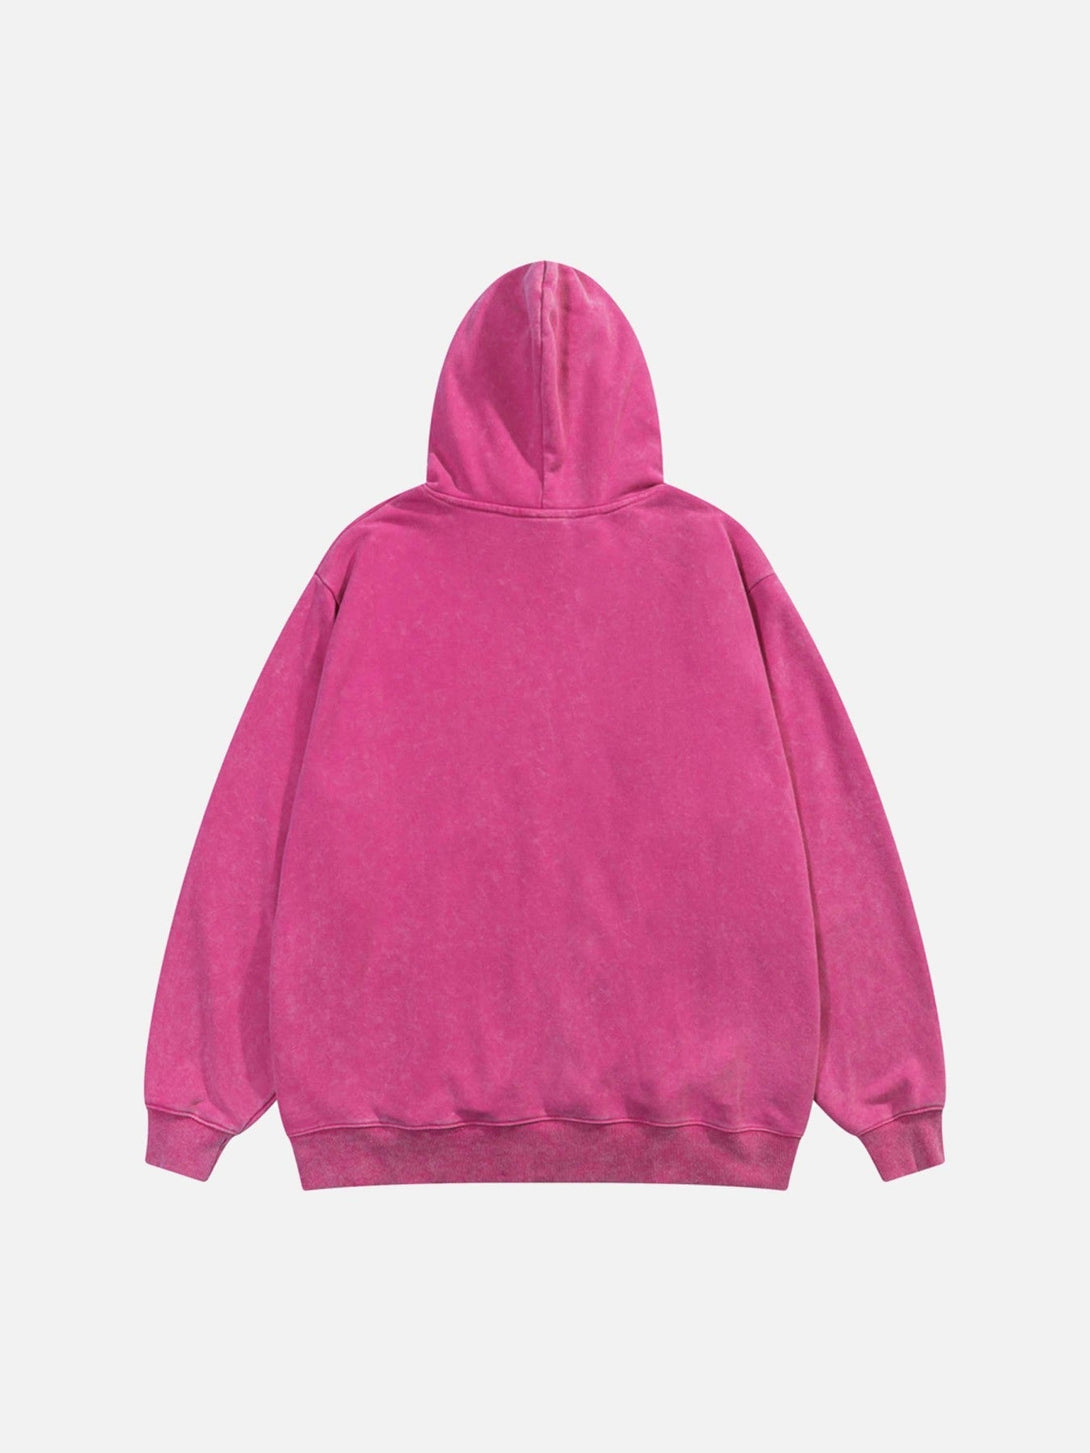 Majesda® - Alphabet Pentagram Print Hooded Sweatshirt- Outfit Ideas - Streetwear Fashion - majesda.com